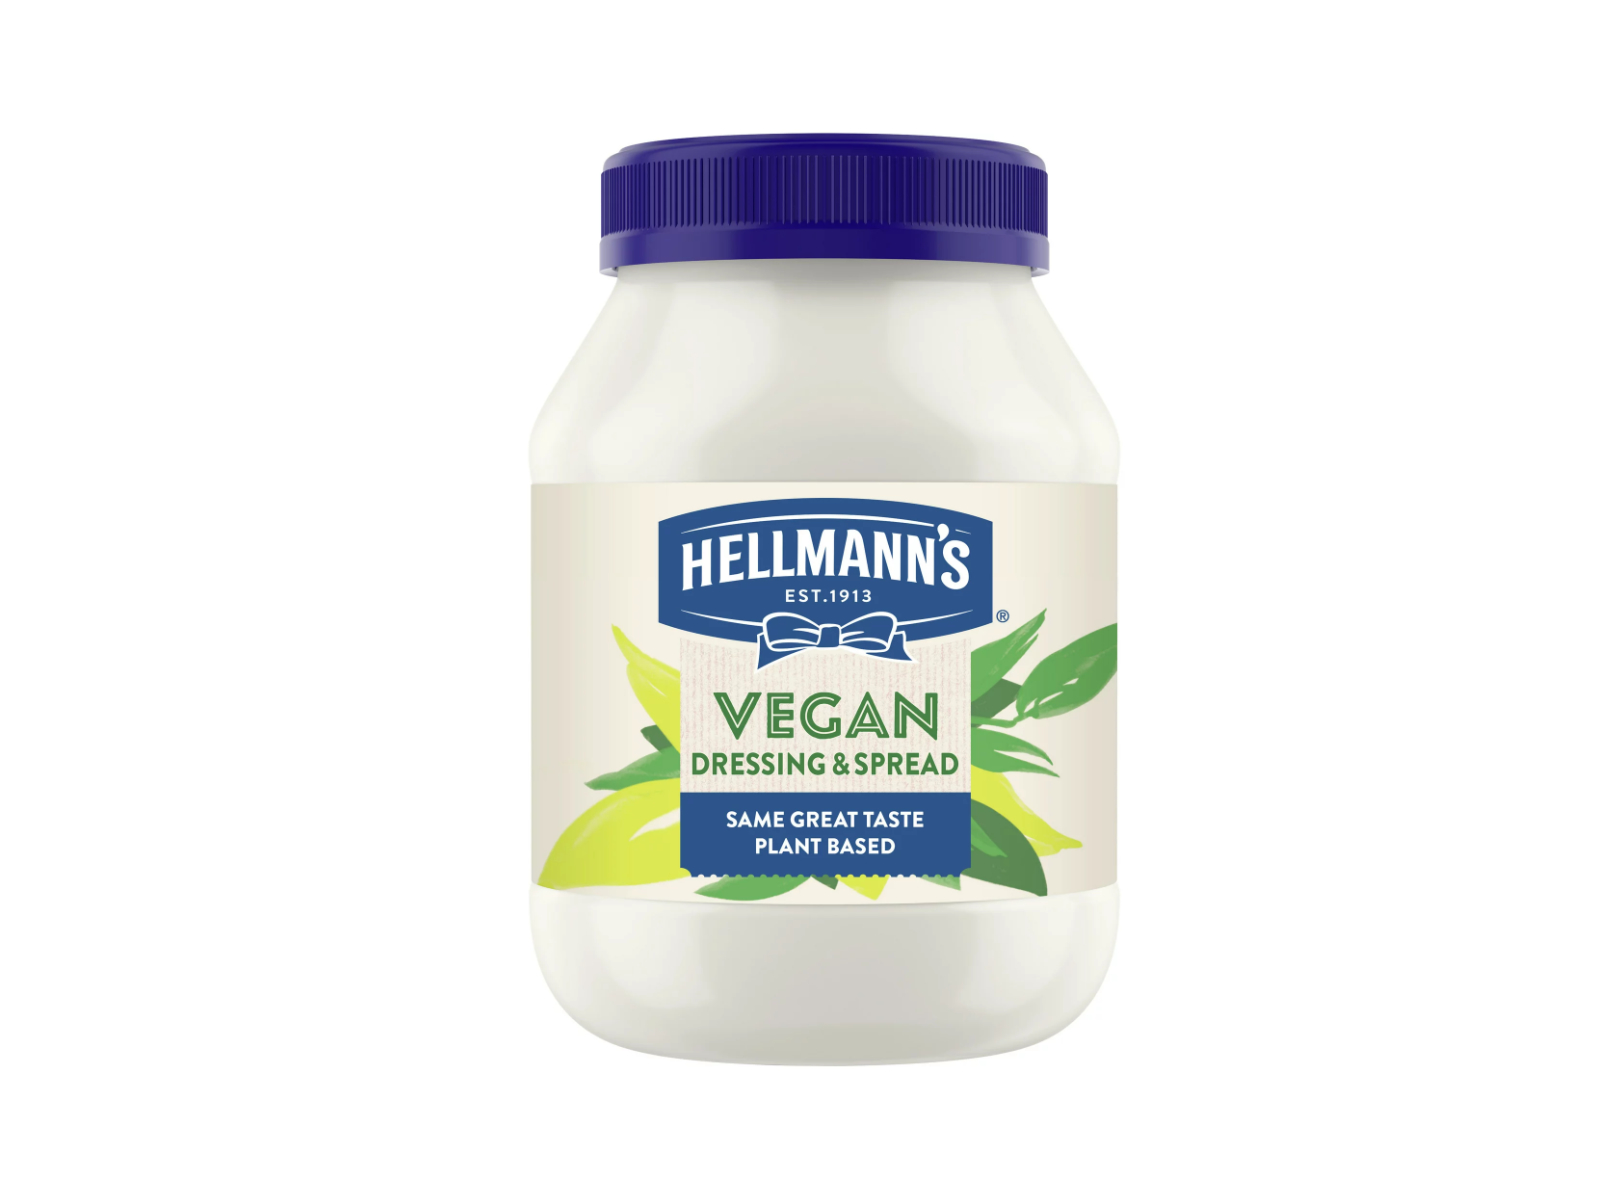 Hellmann’s Vegan Dressing and Spread